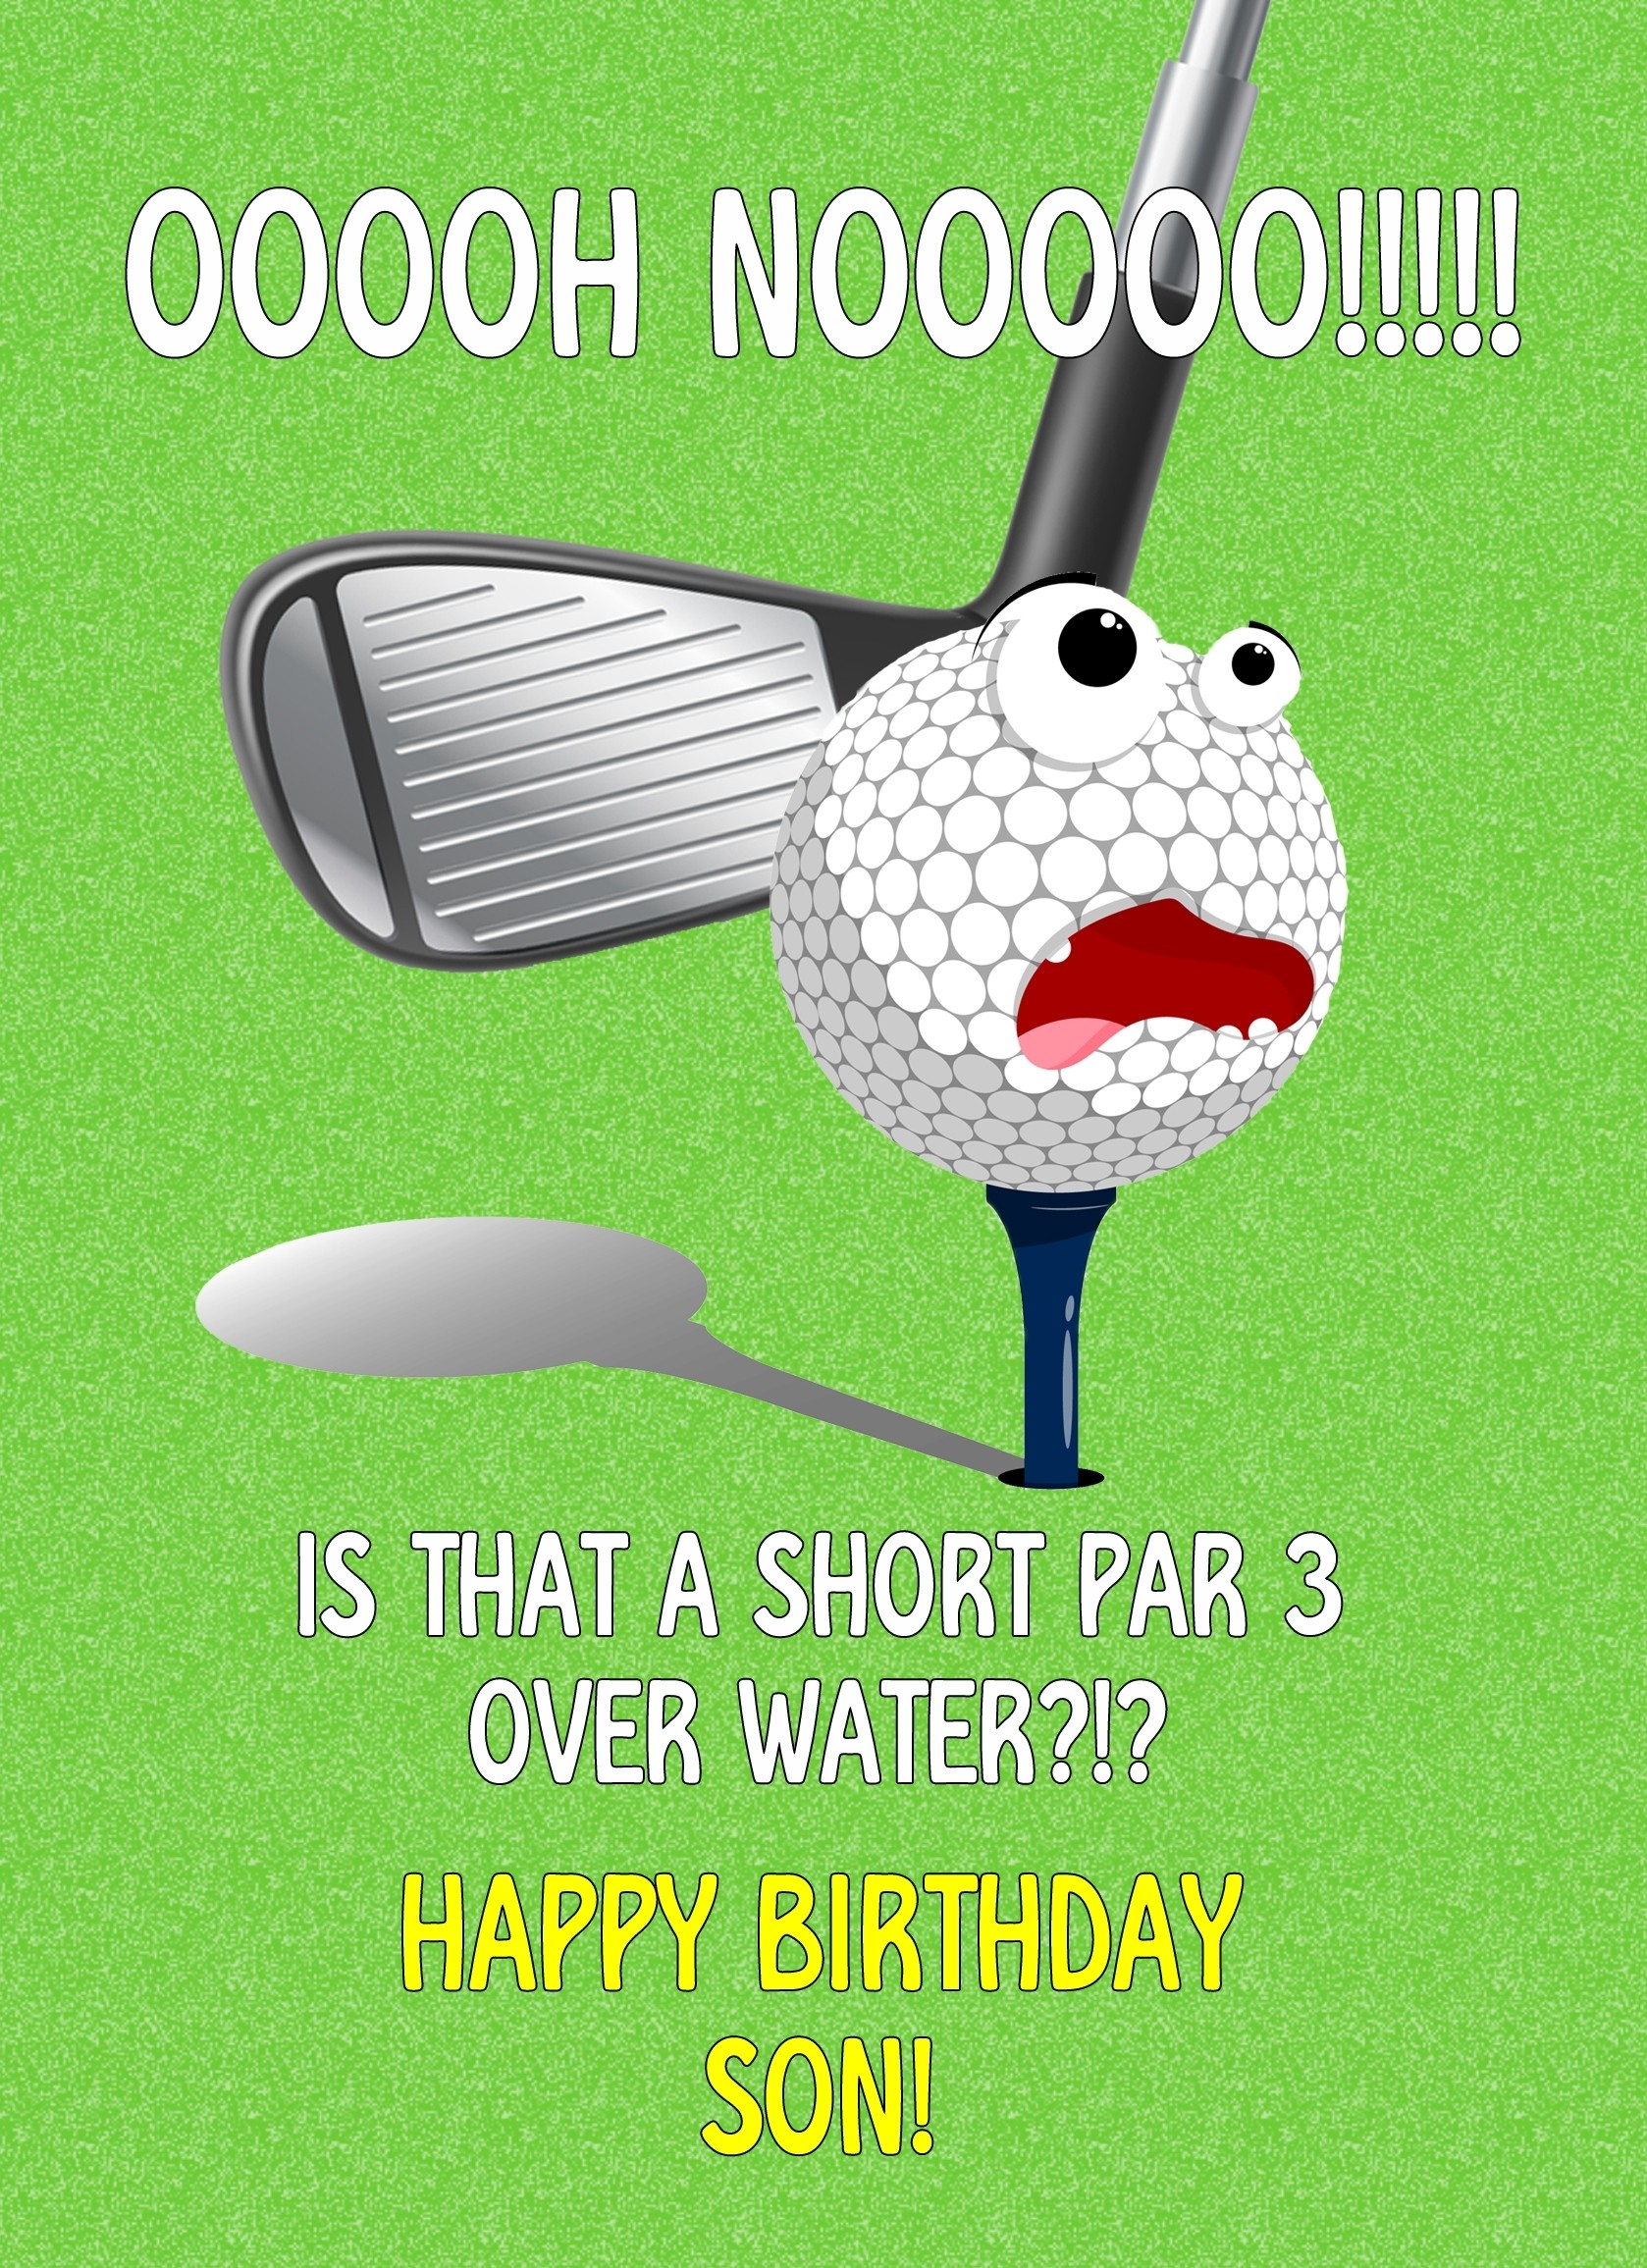 Funny Golf Birthday Card for Son